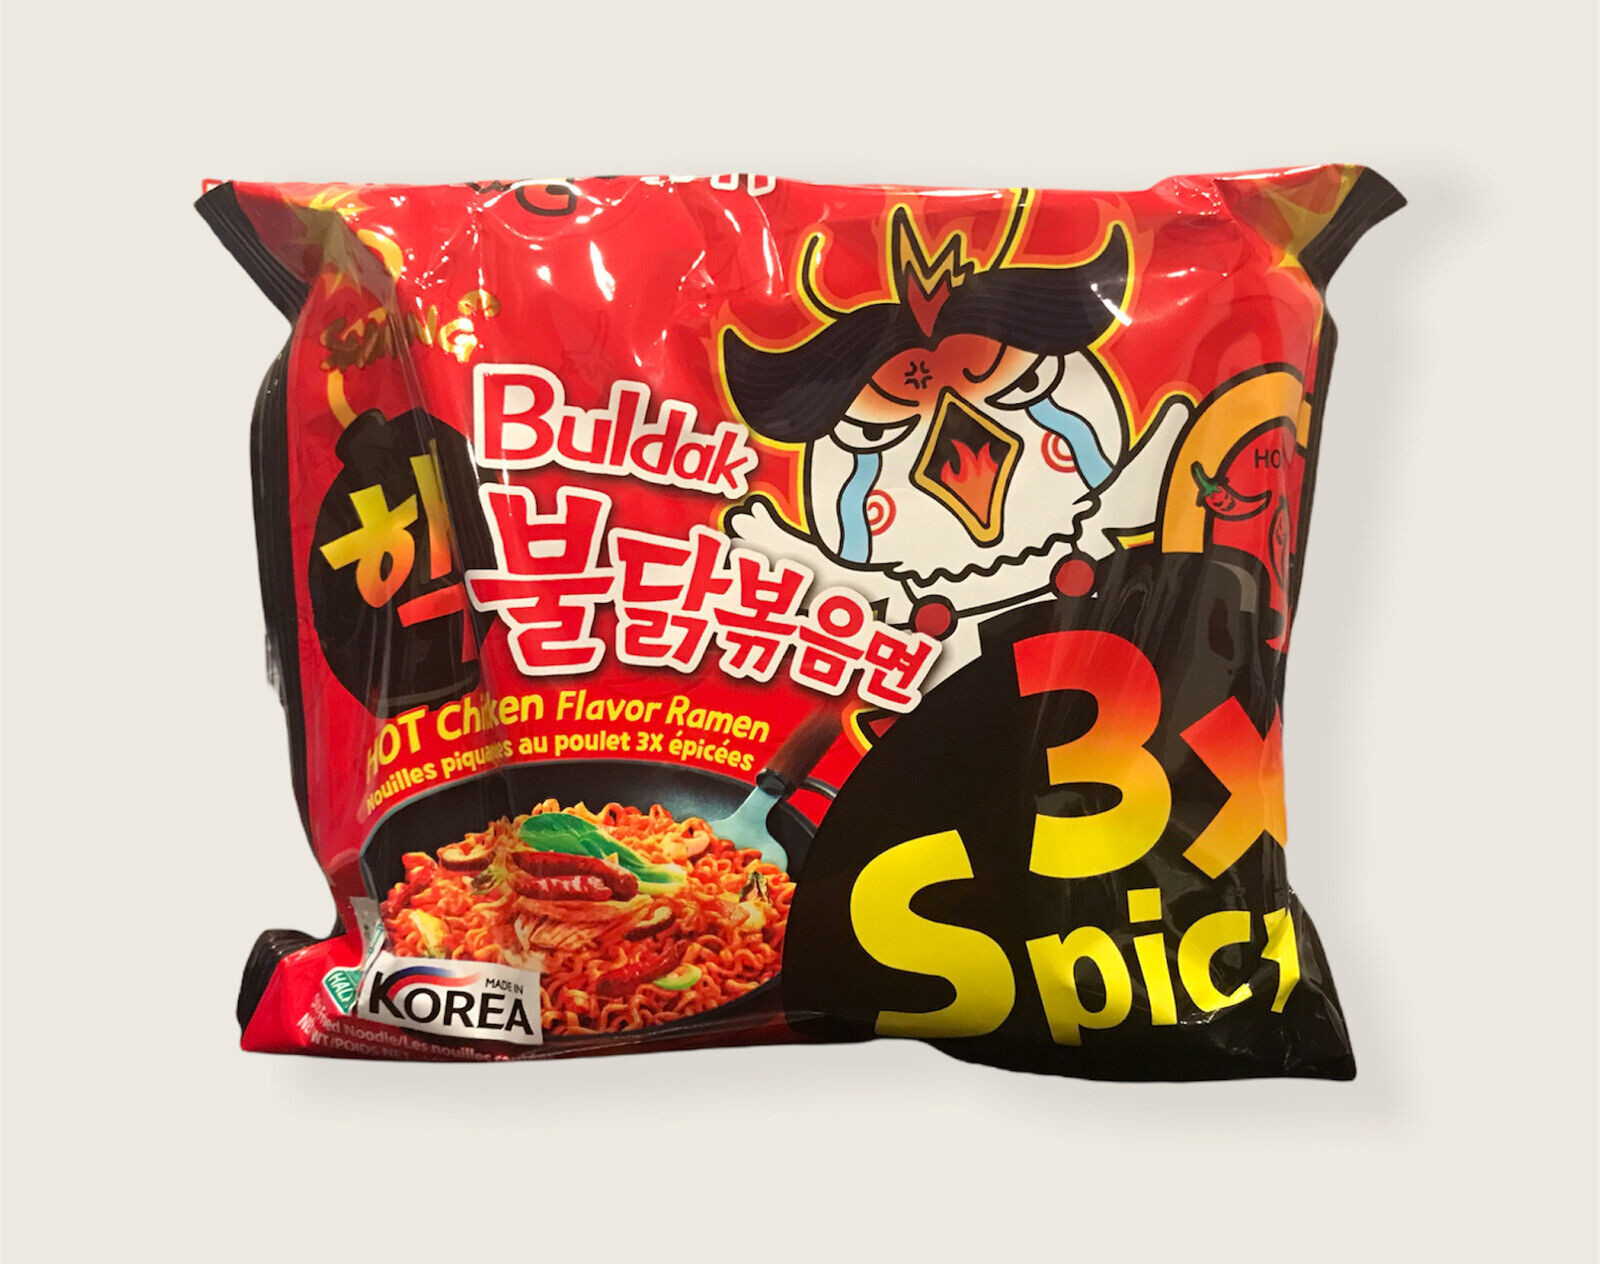 "3x Spicy" Ramen Expiry: 11/15/22 1 Pack Samyang Buldak Hot Chicken Korea Noodle